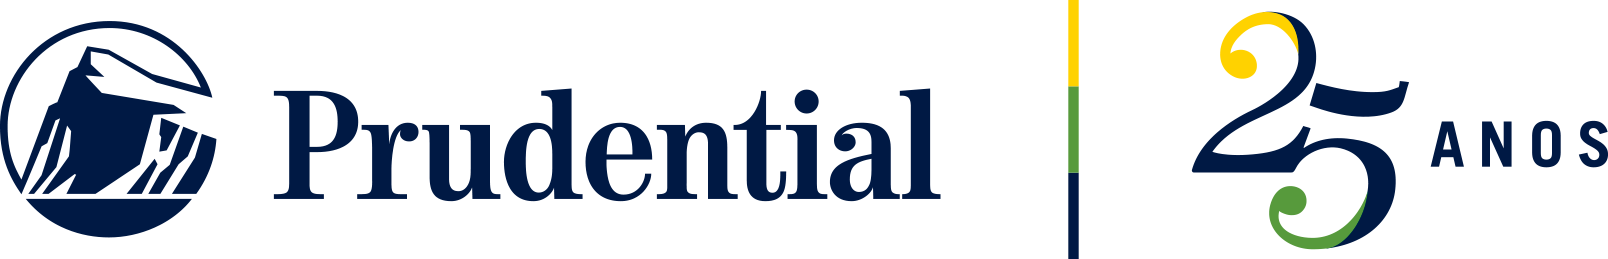 Prudential do Brasil - Logomarca